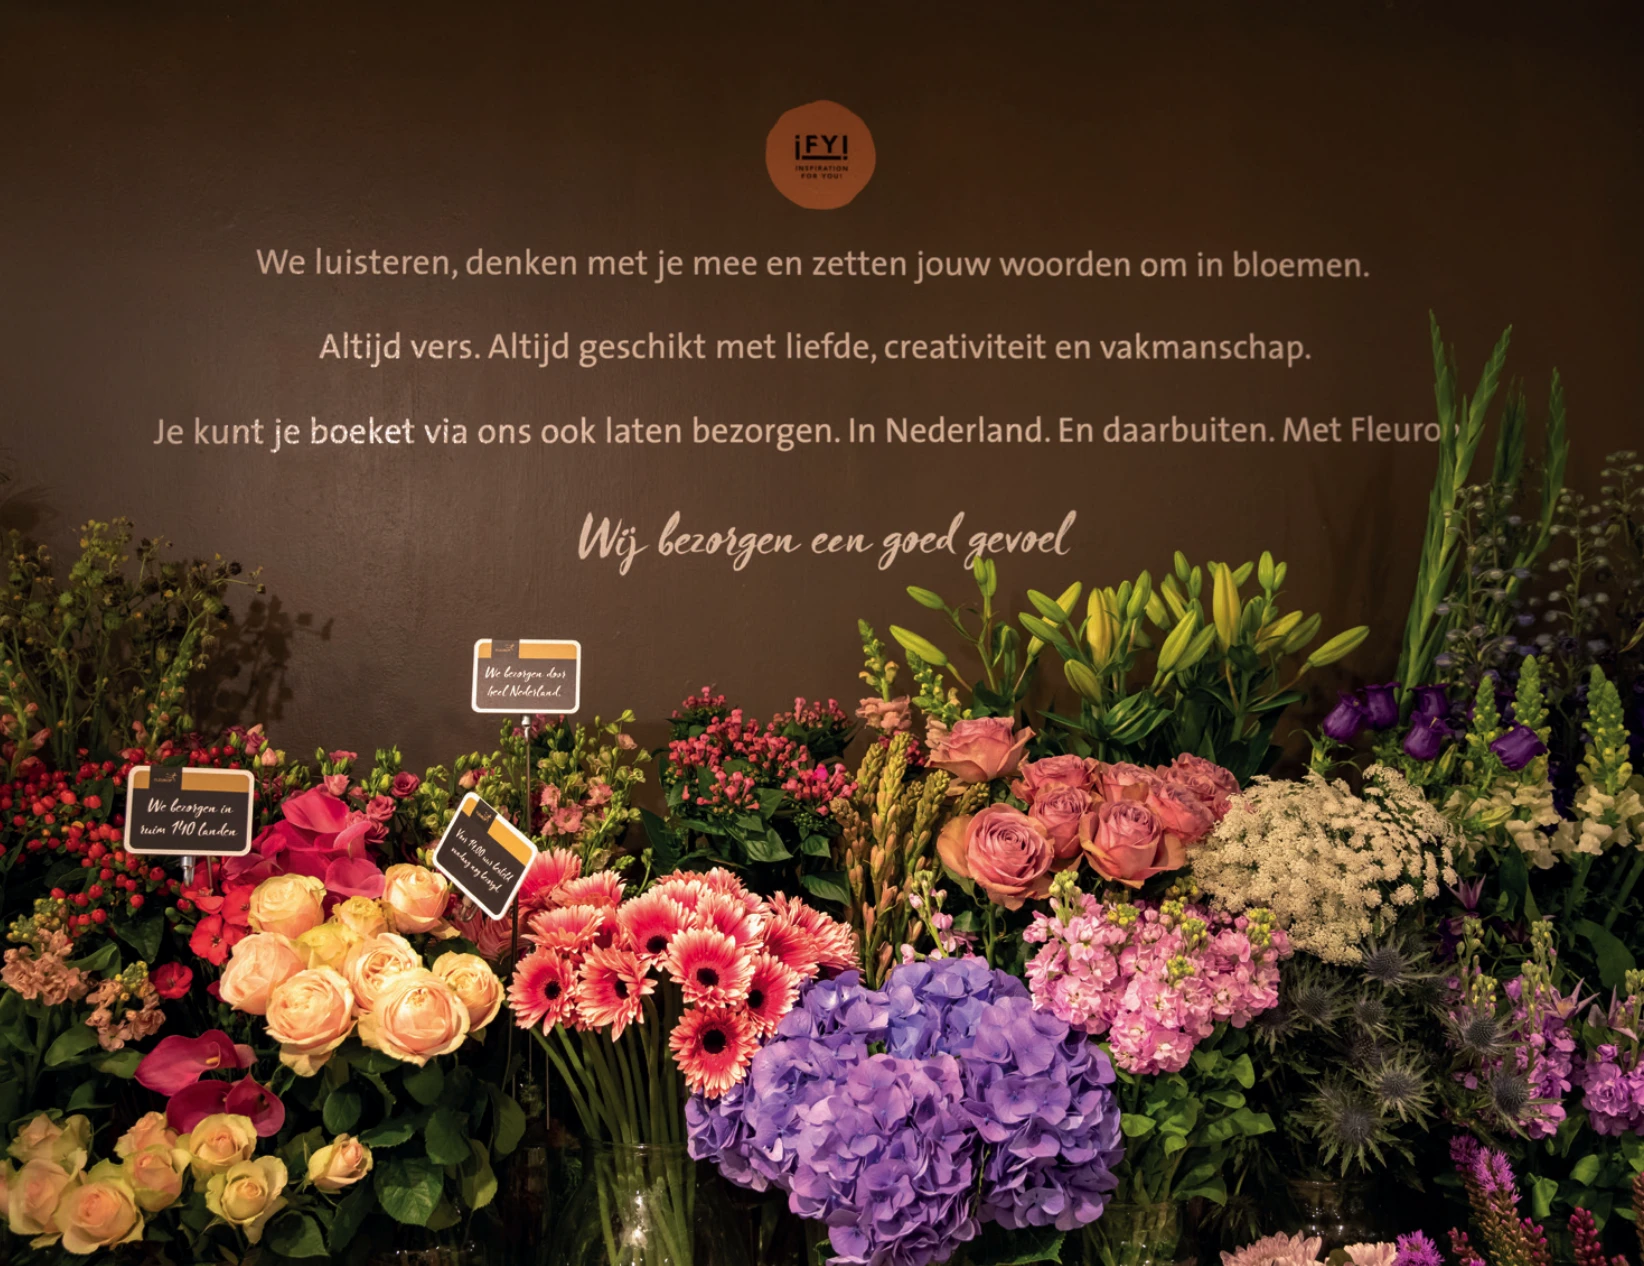 Flowershop Bergentheim Bloemen bestellen.